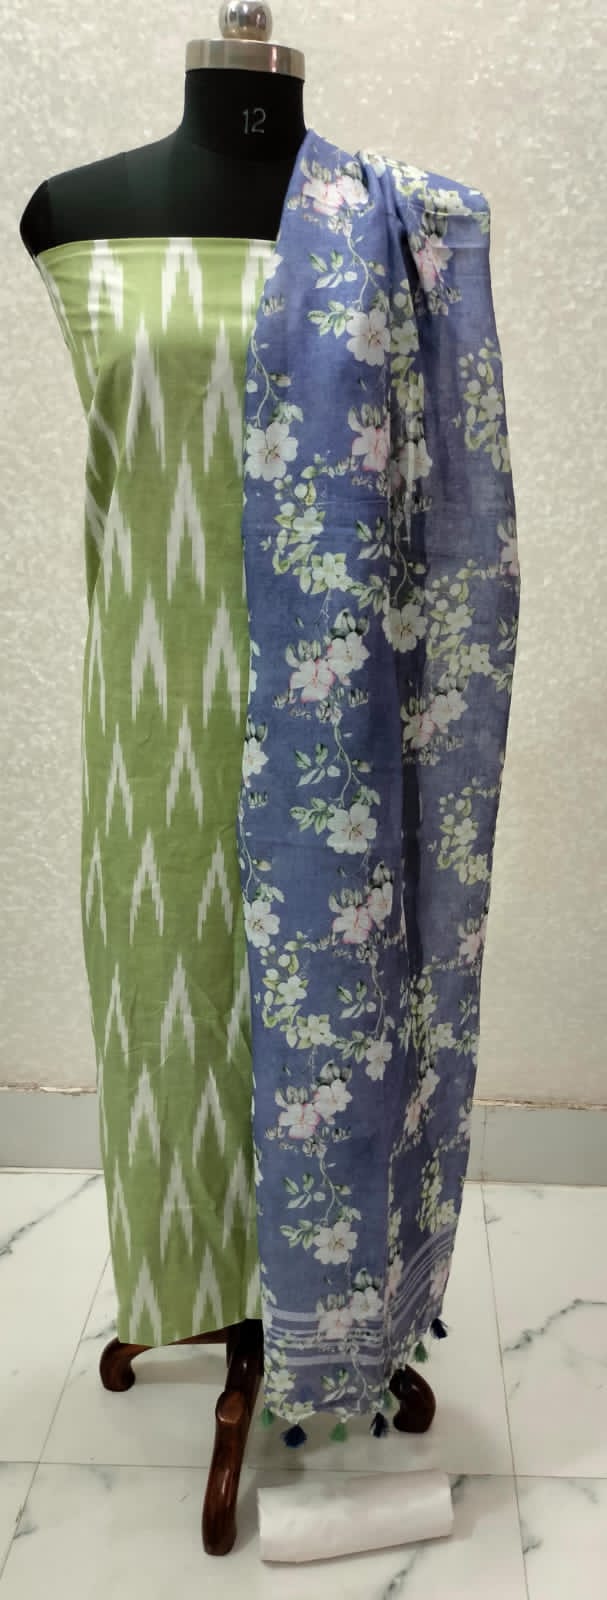 Green Handloom Ikkat Top and Printed Linen Dupatta 2Pc Unstitched Dress Material